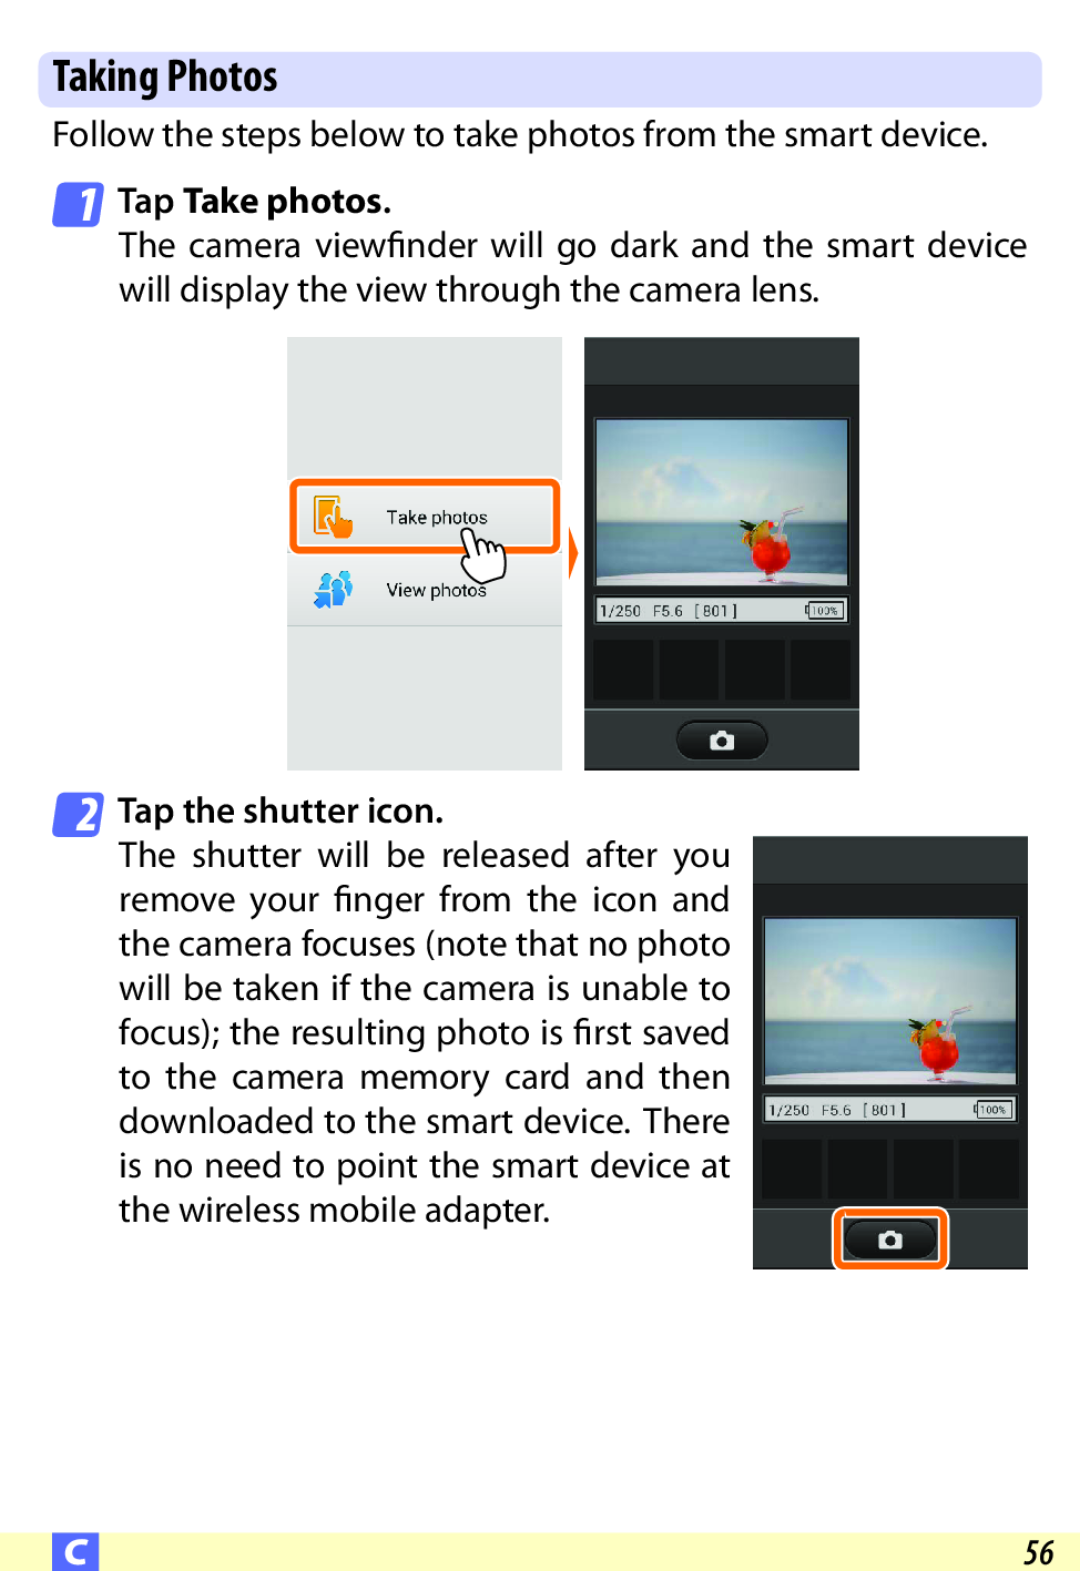 Nikon D600 user manual Taking Photos, Tap Take photos, Tap the shutter icon 